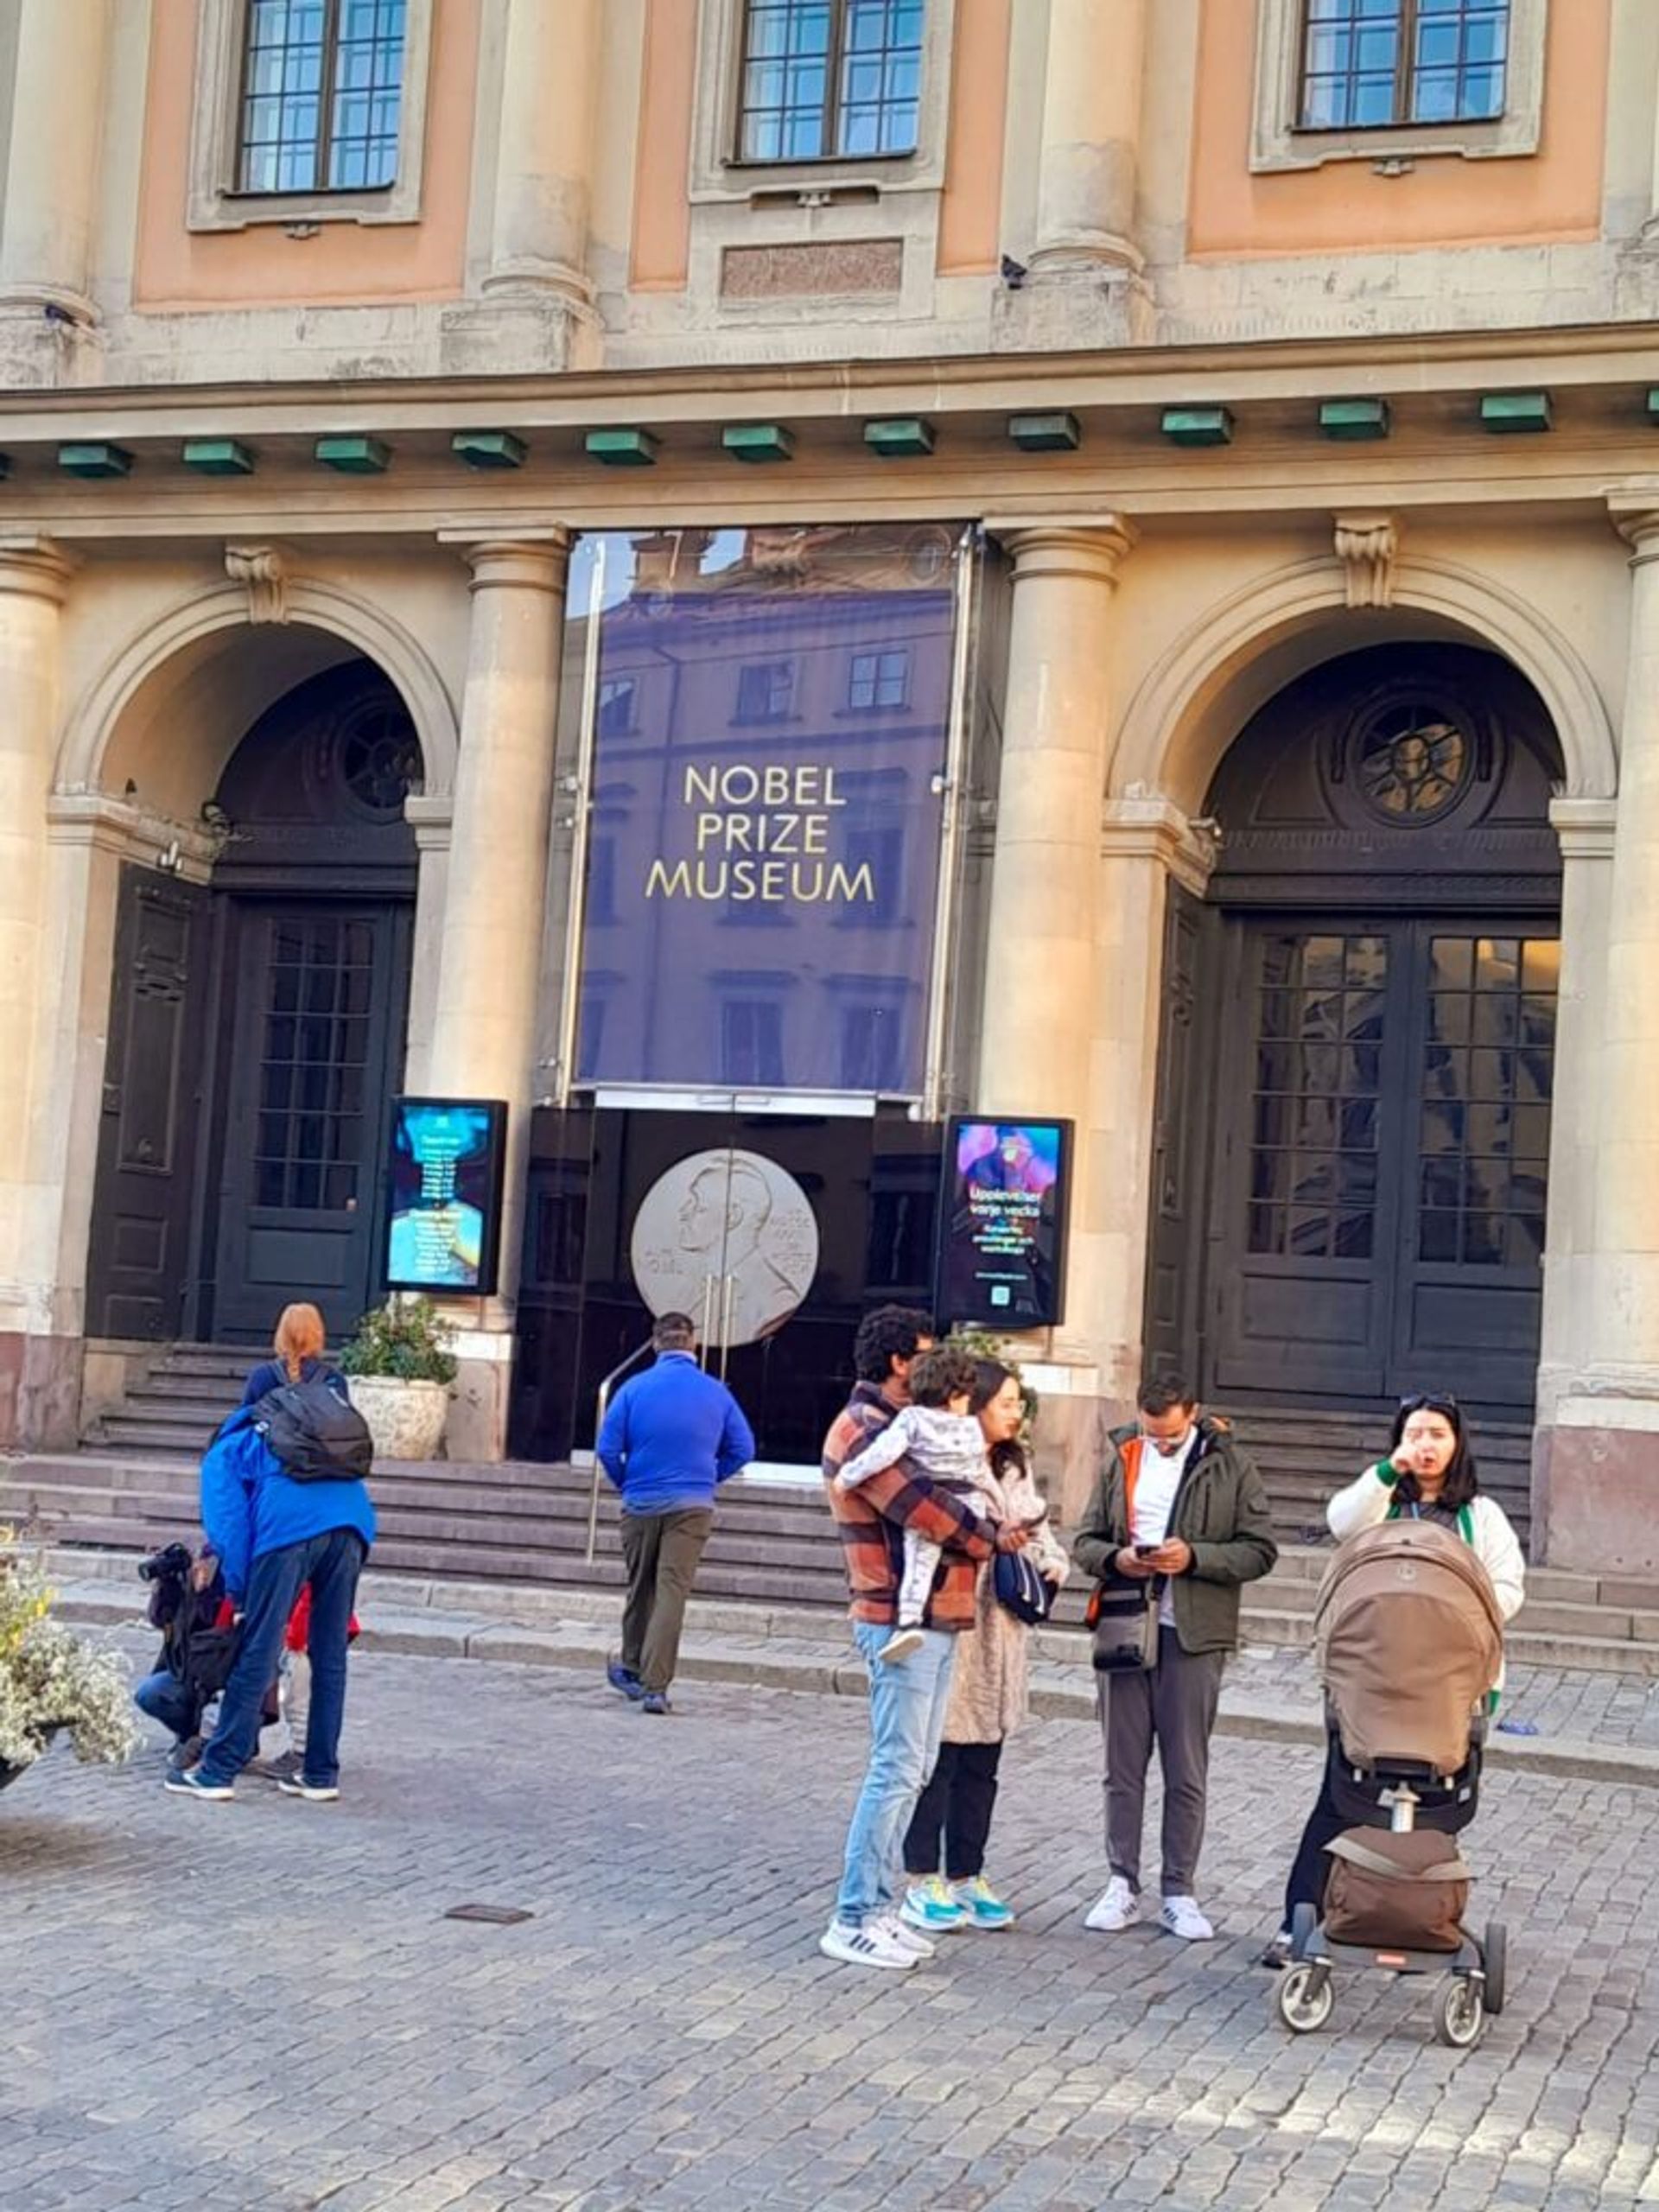 The Nobel Peace Museum 